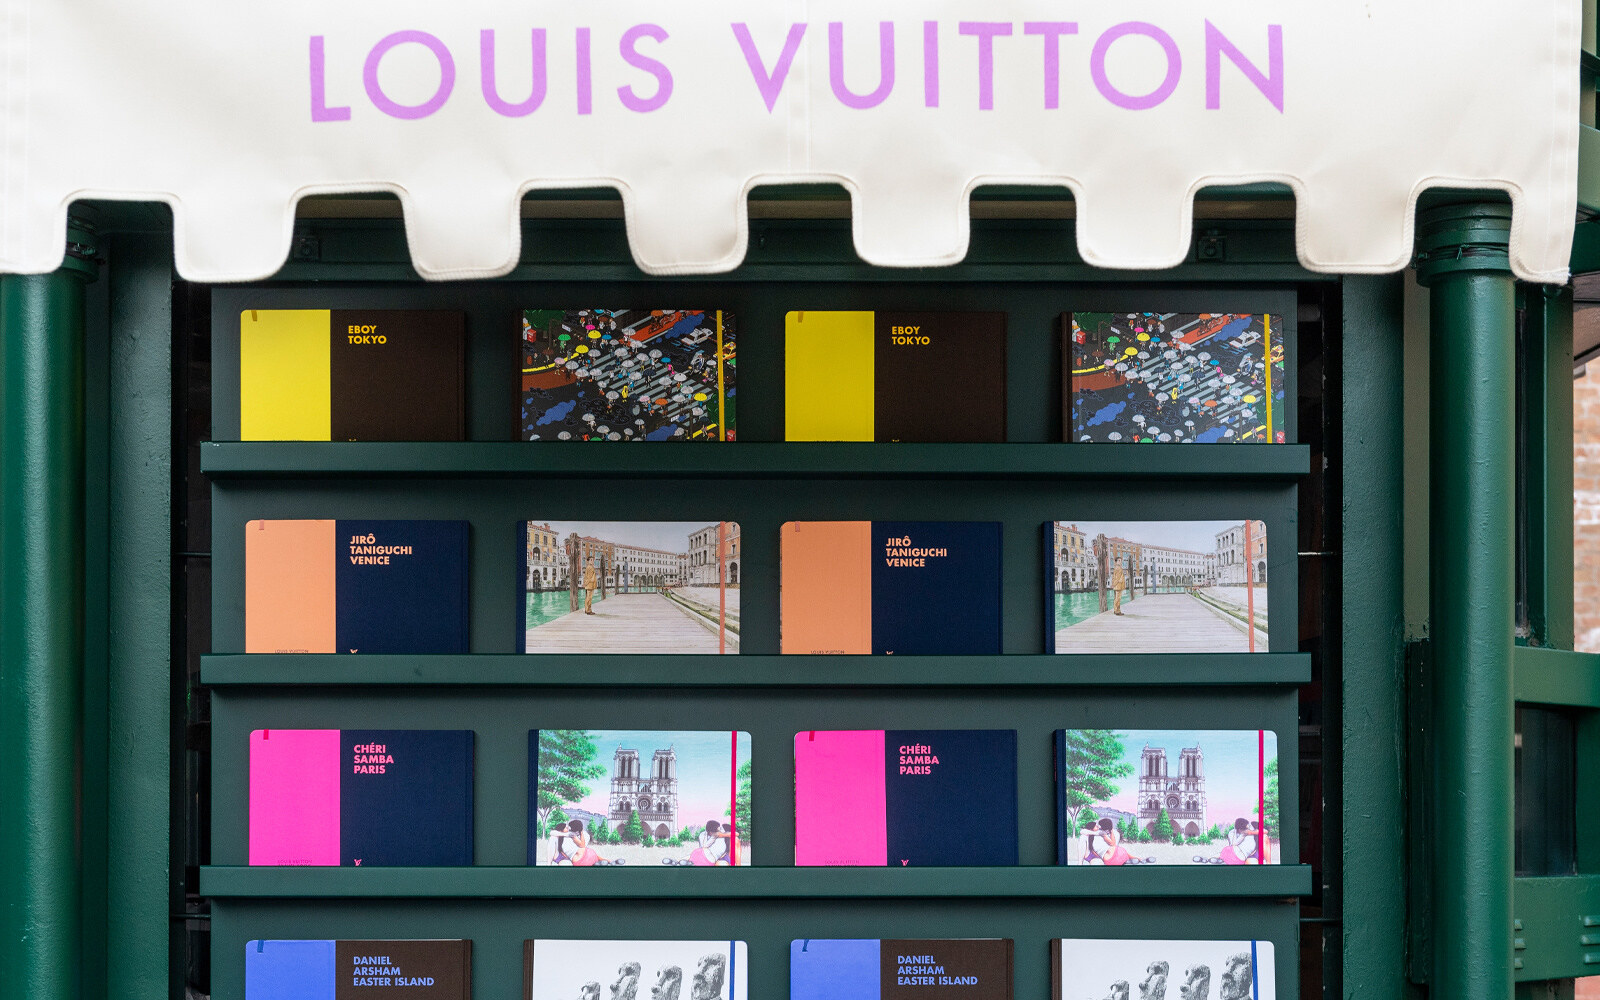 Louis Vuitton edicole Venezia